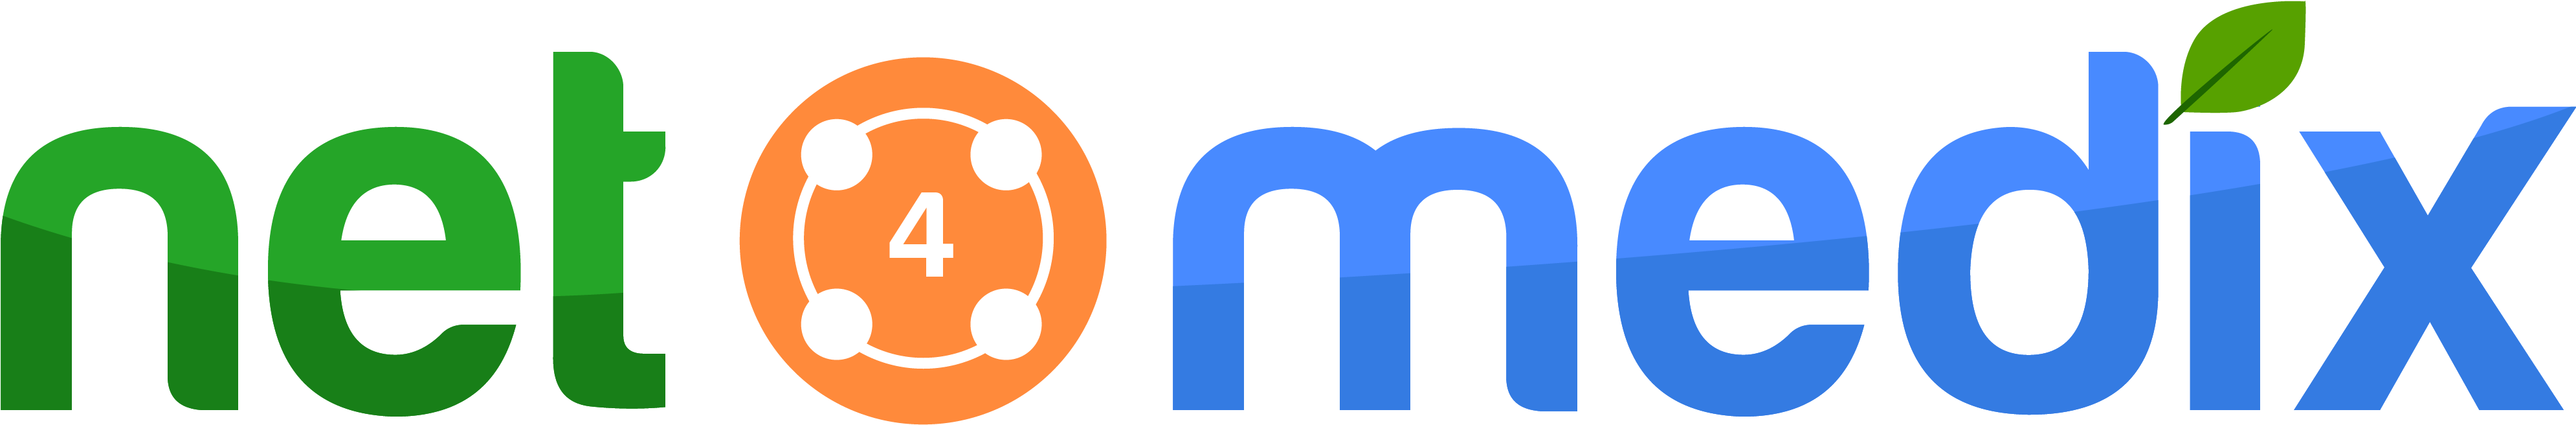 Toggle Navigation - Cnn Underscored Logo (4007x893)